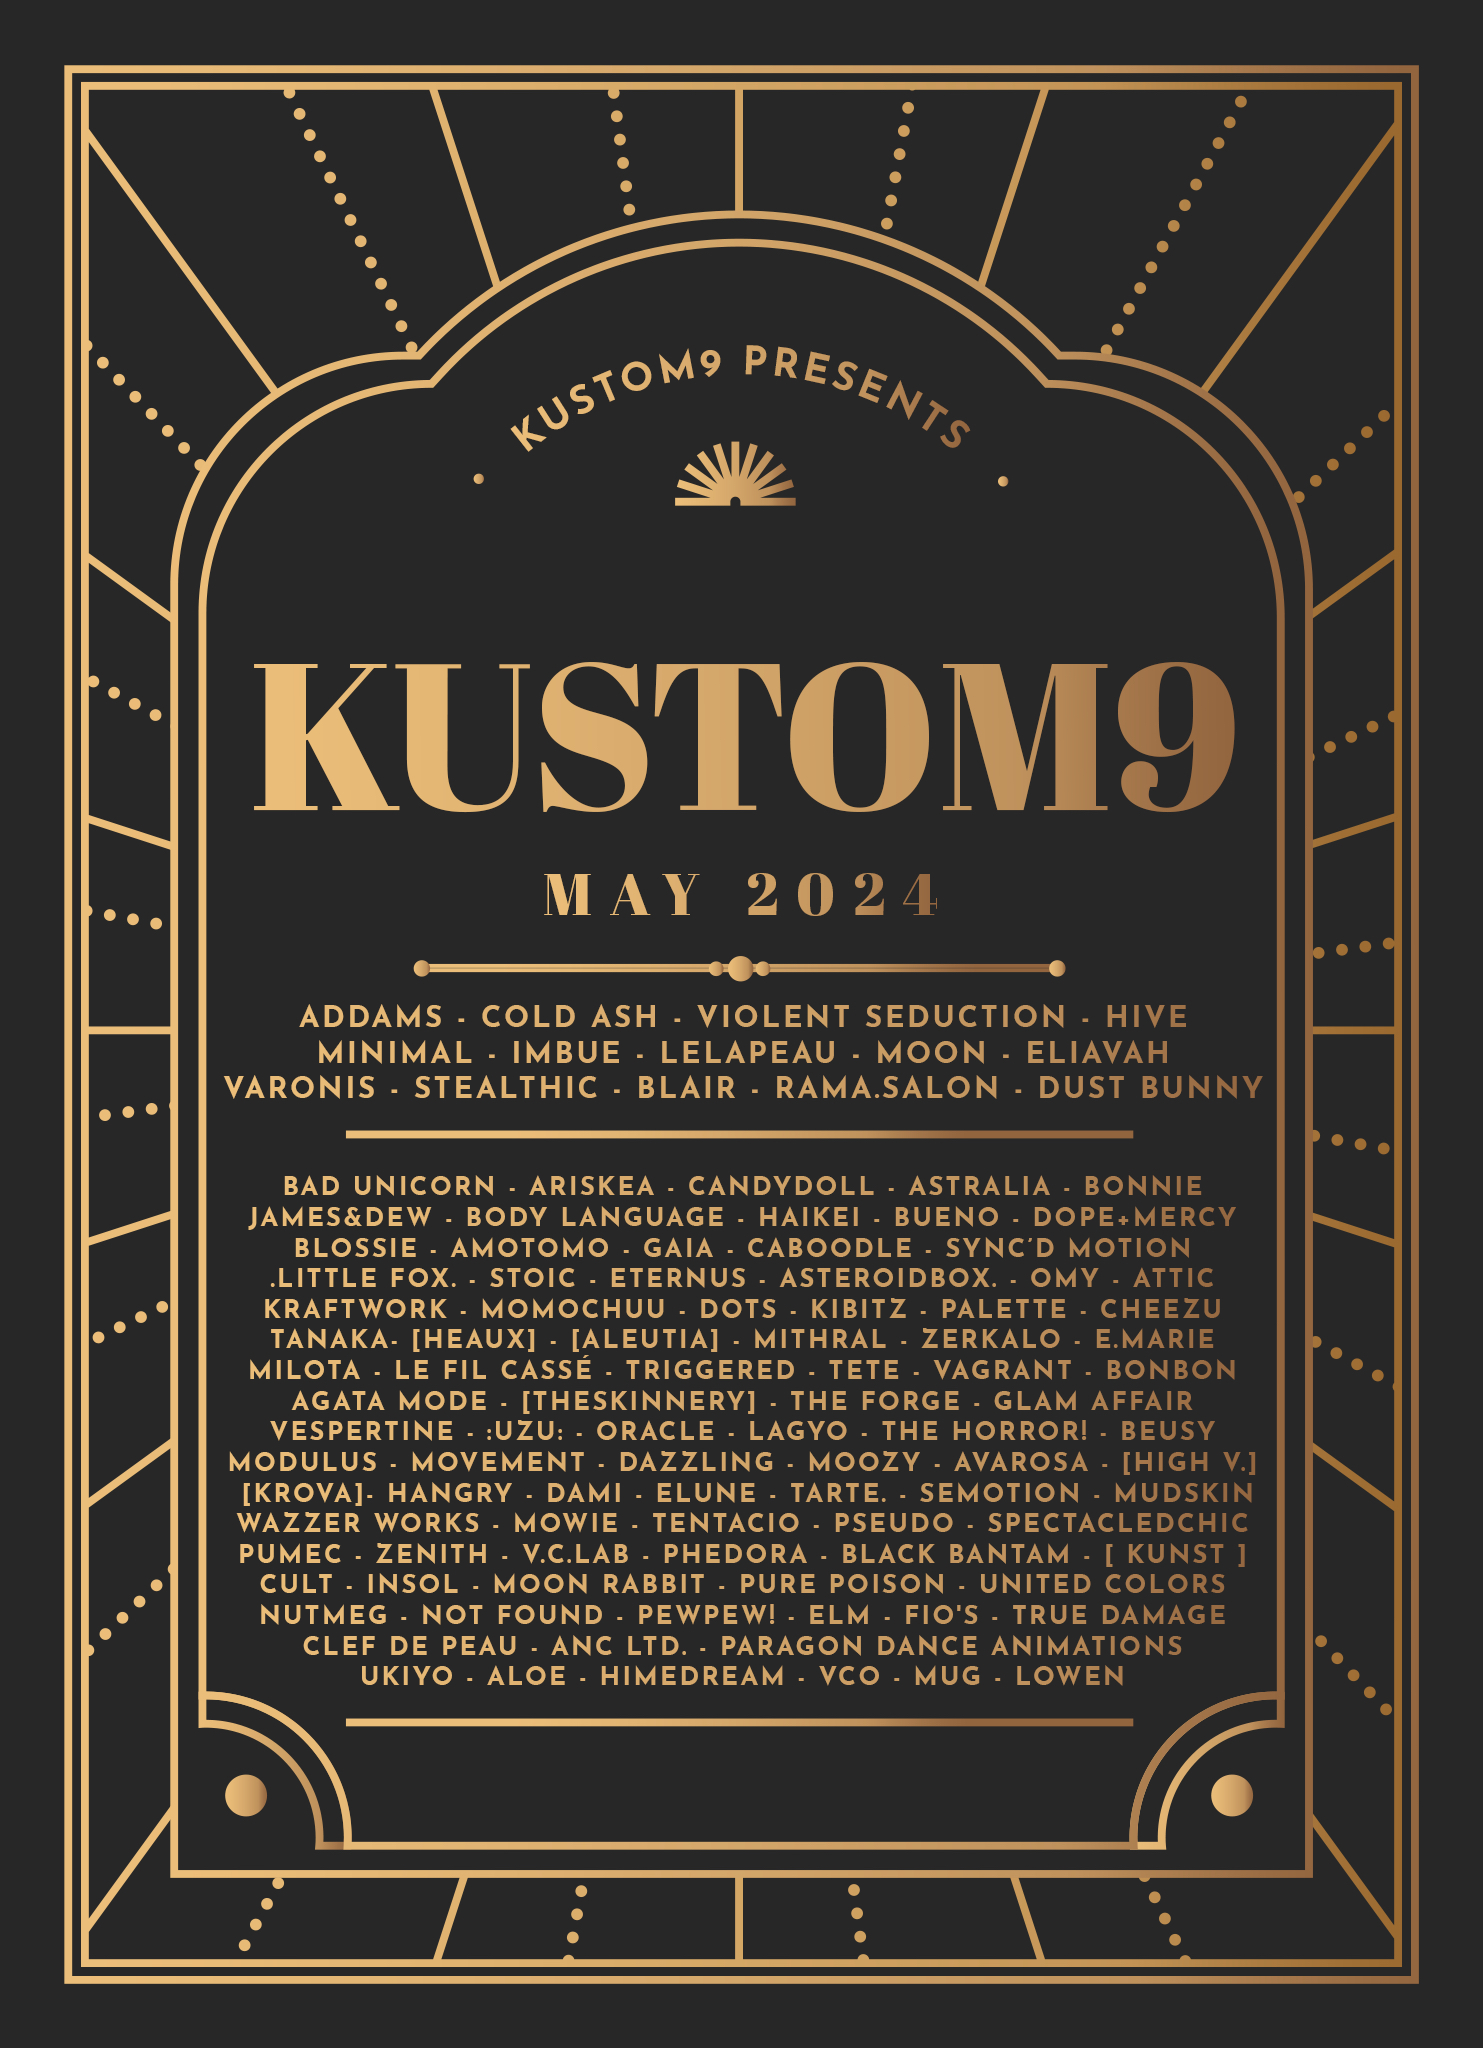 Press Release – Kustom9 – May 2024